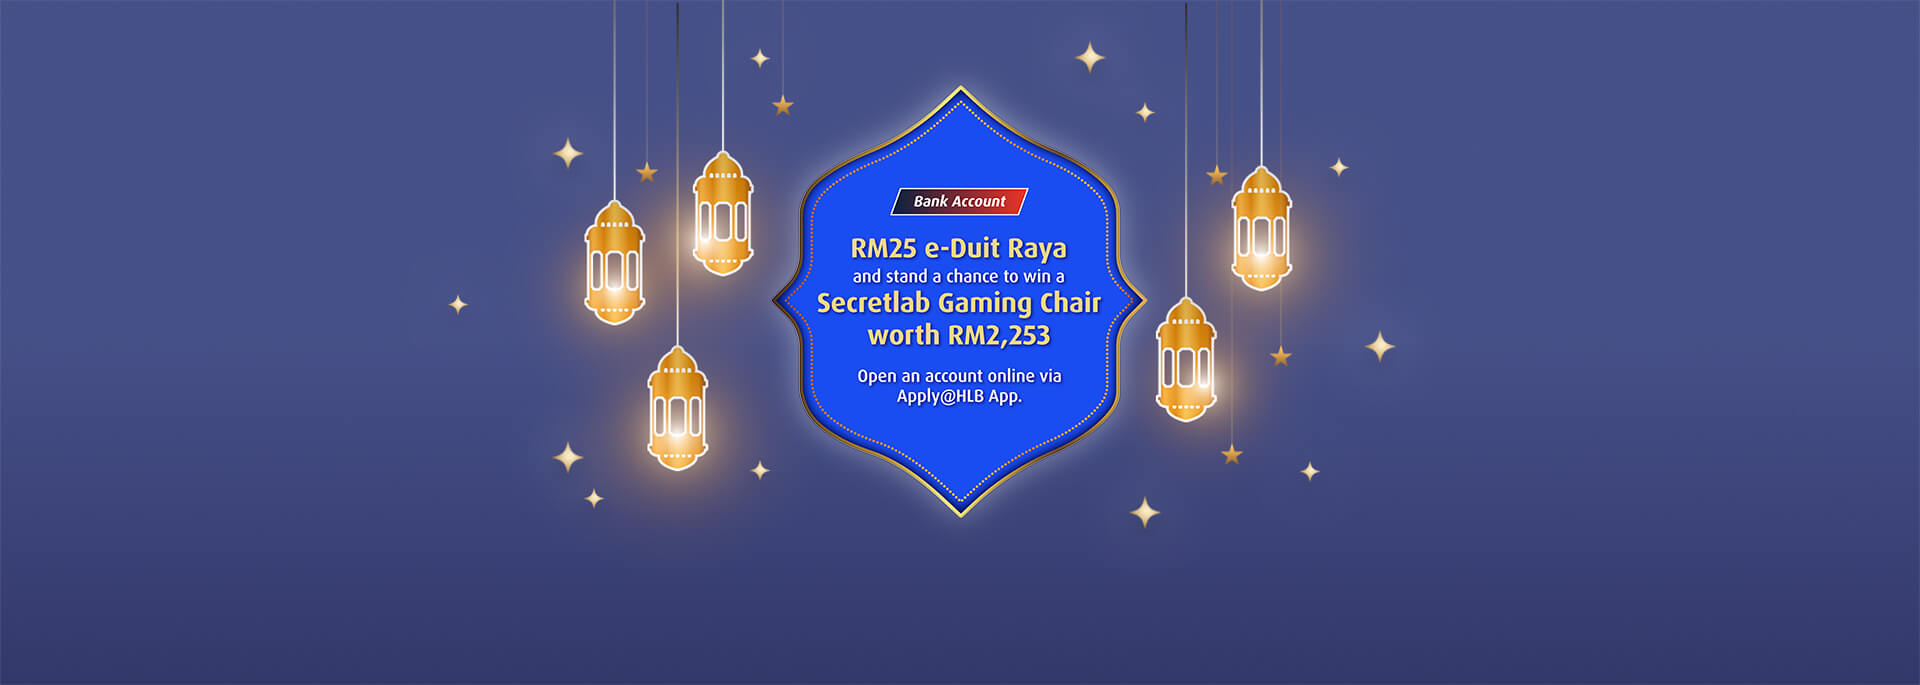 Raya 2022 Deposits Bank Account Promotion